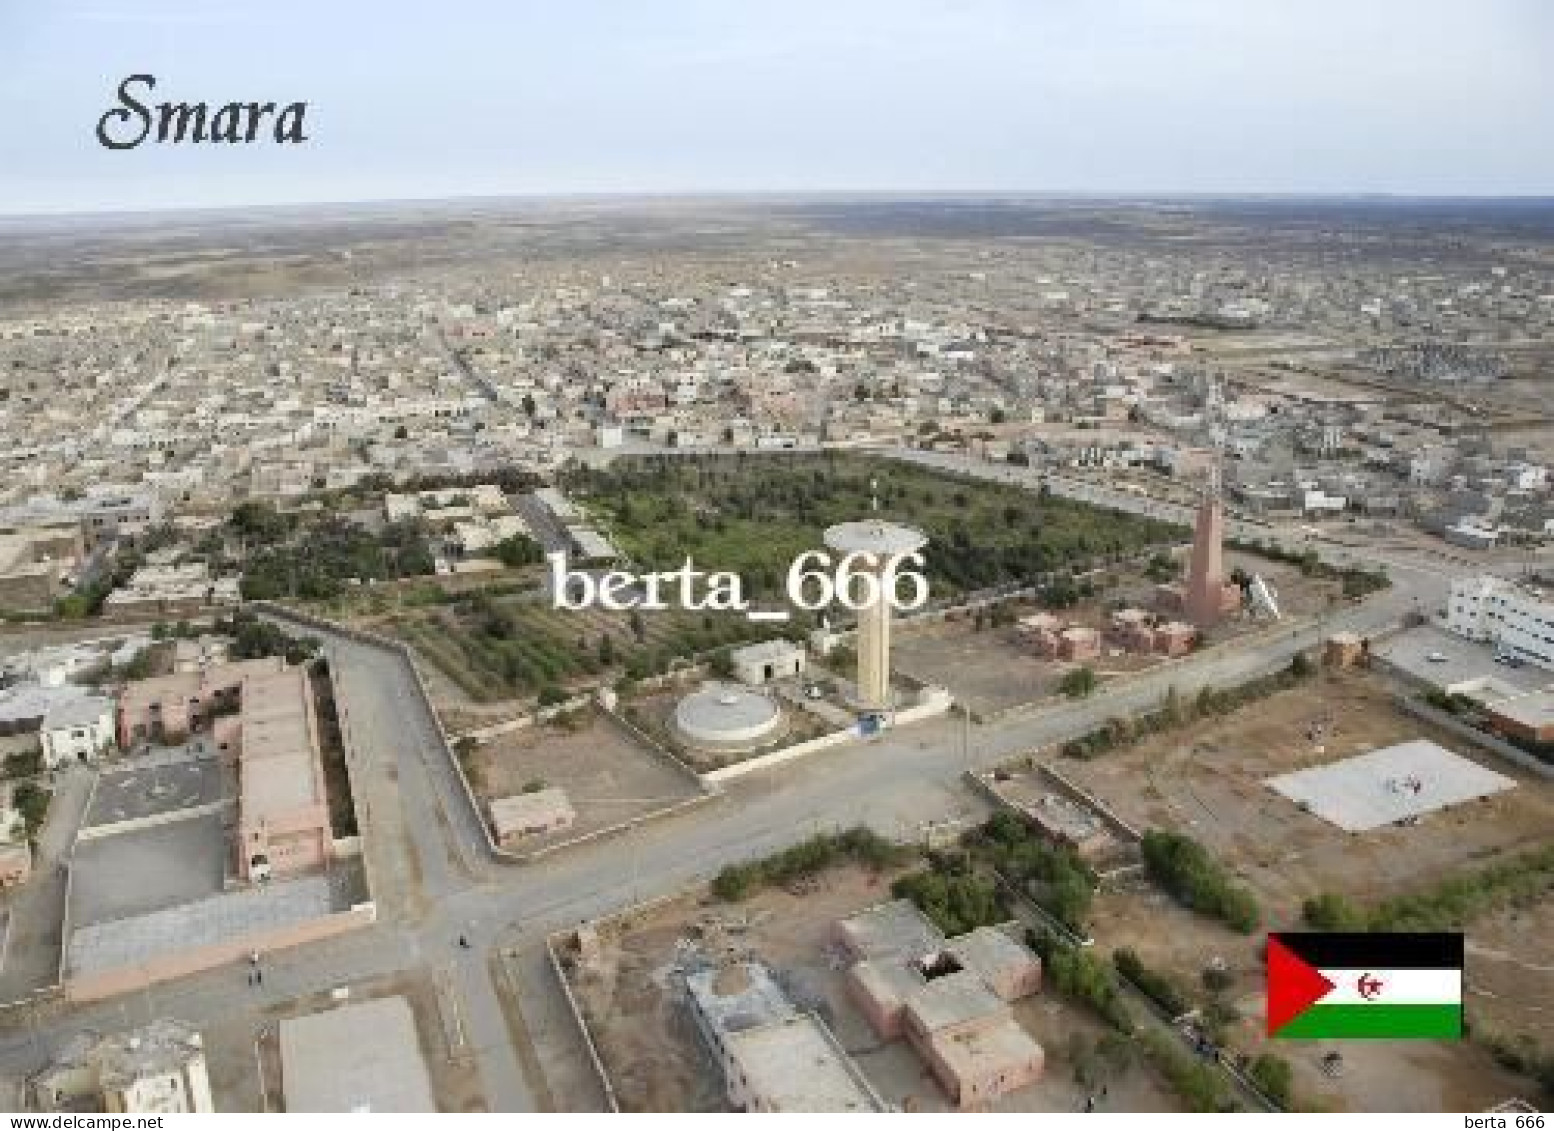 Western Sahara Smara Aerial View New Postcard - Sahara Occidentale